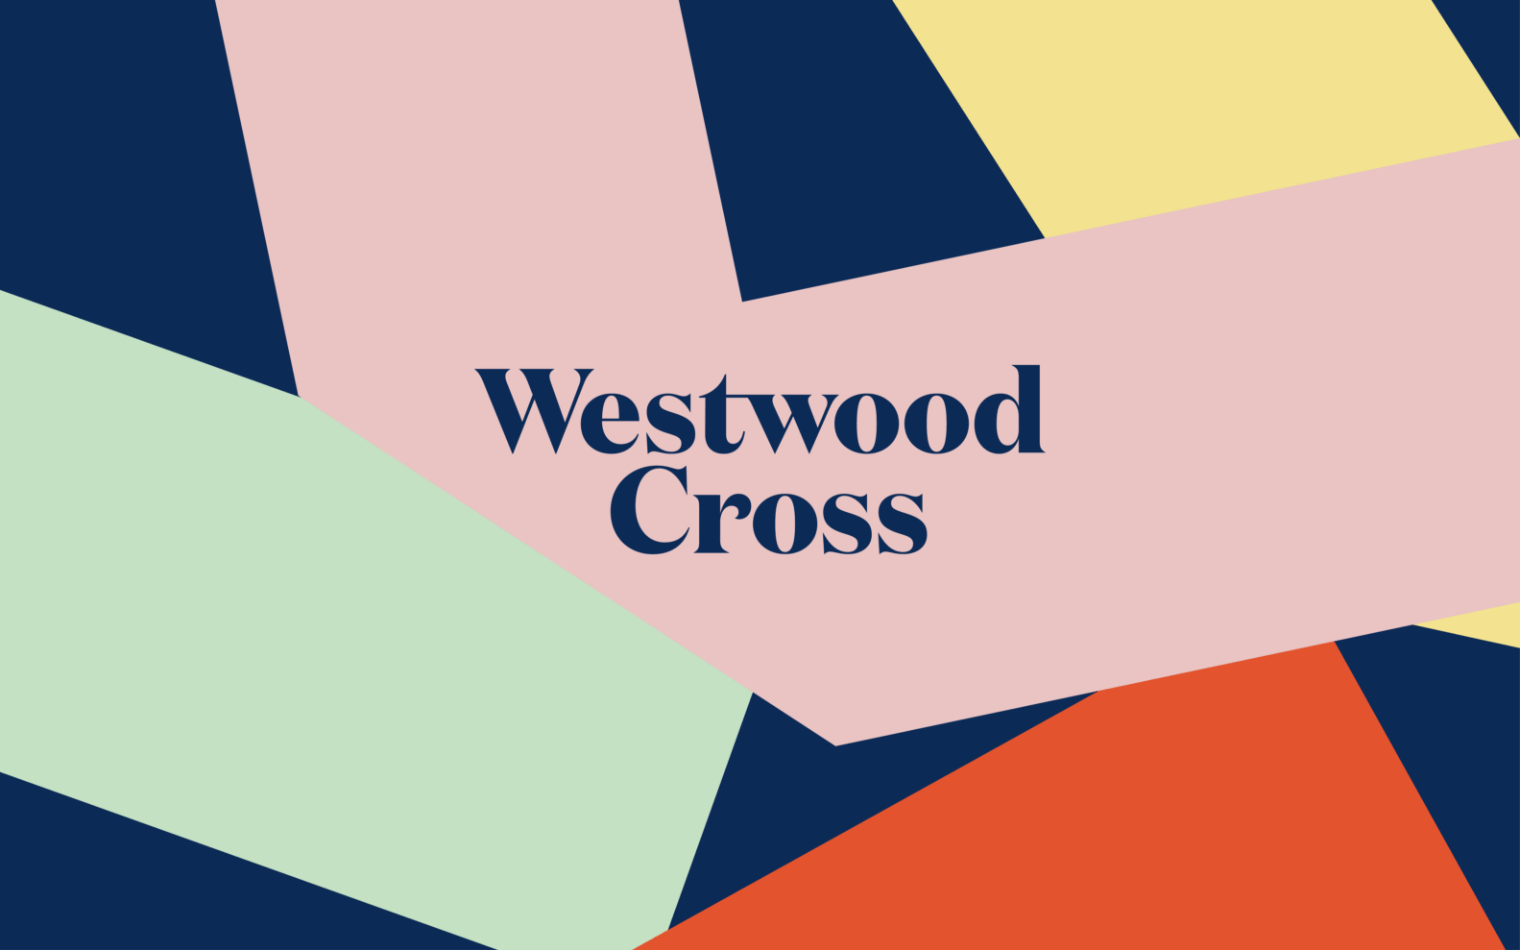 Westwood Cross | Steve Edge Design